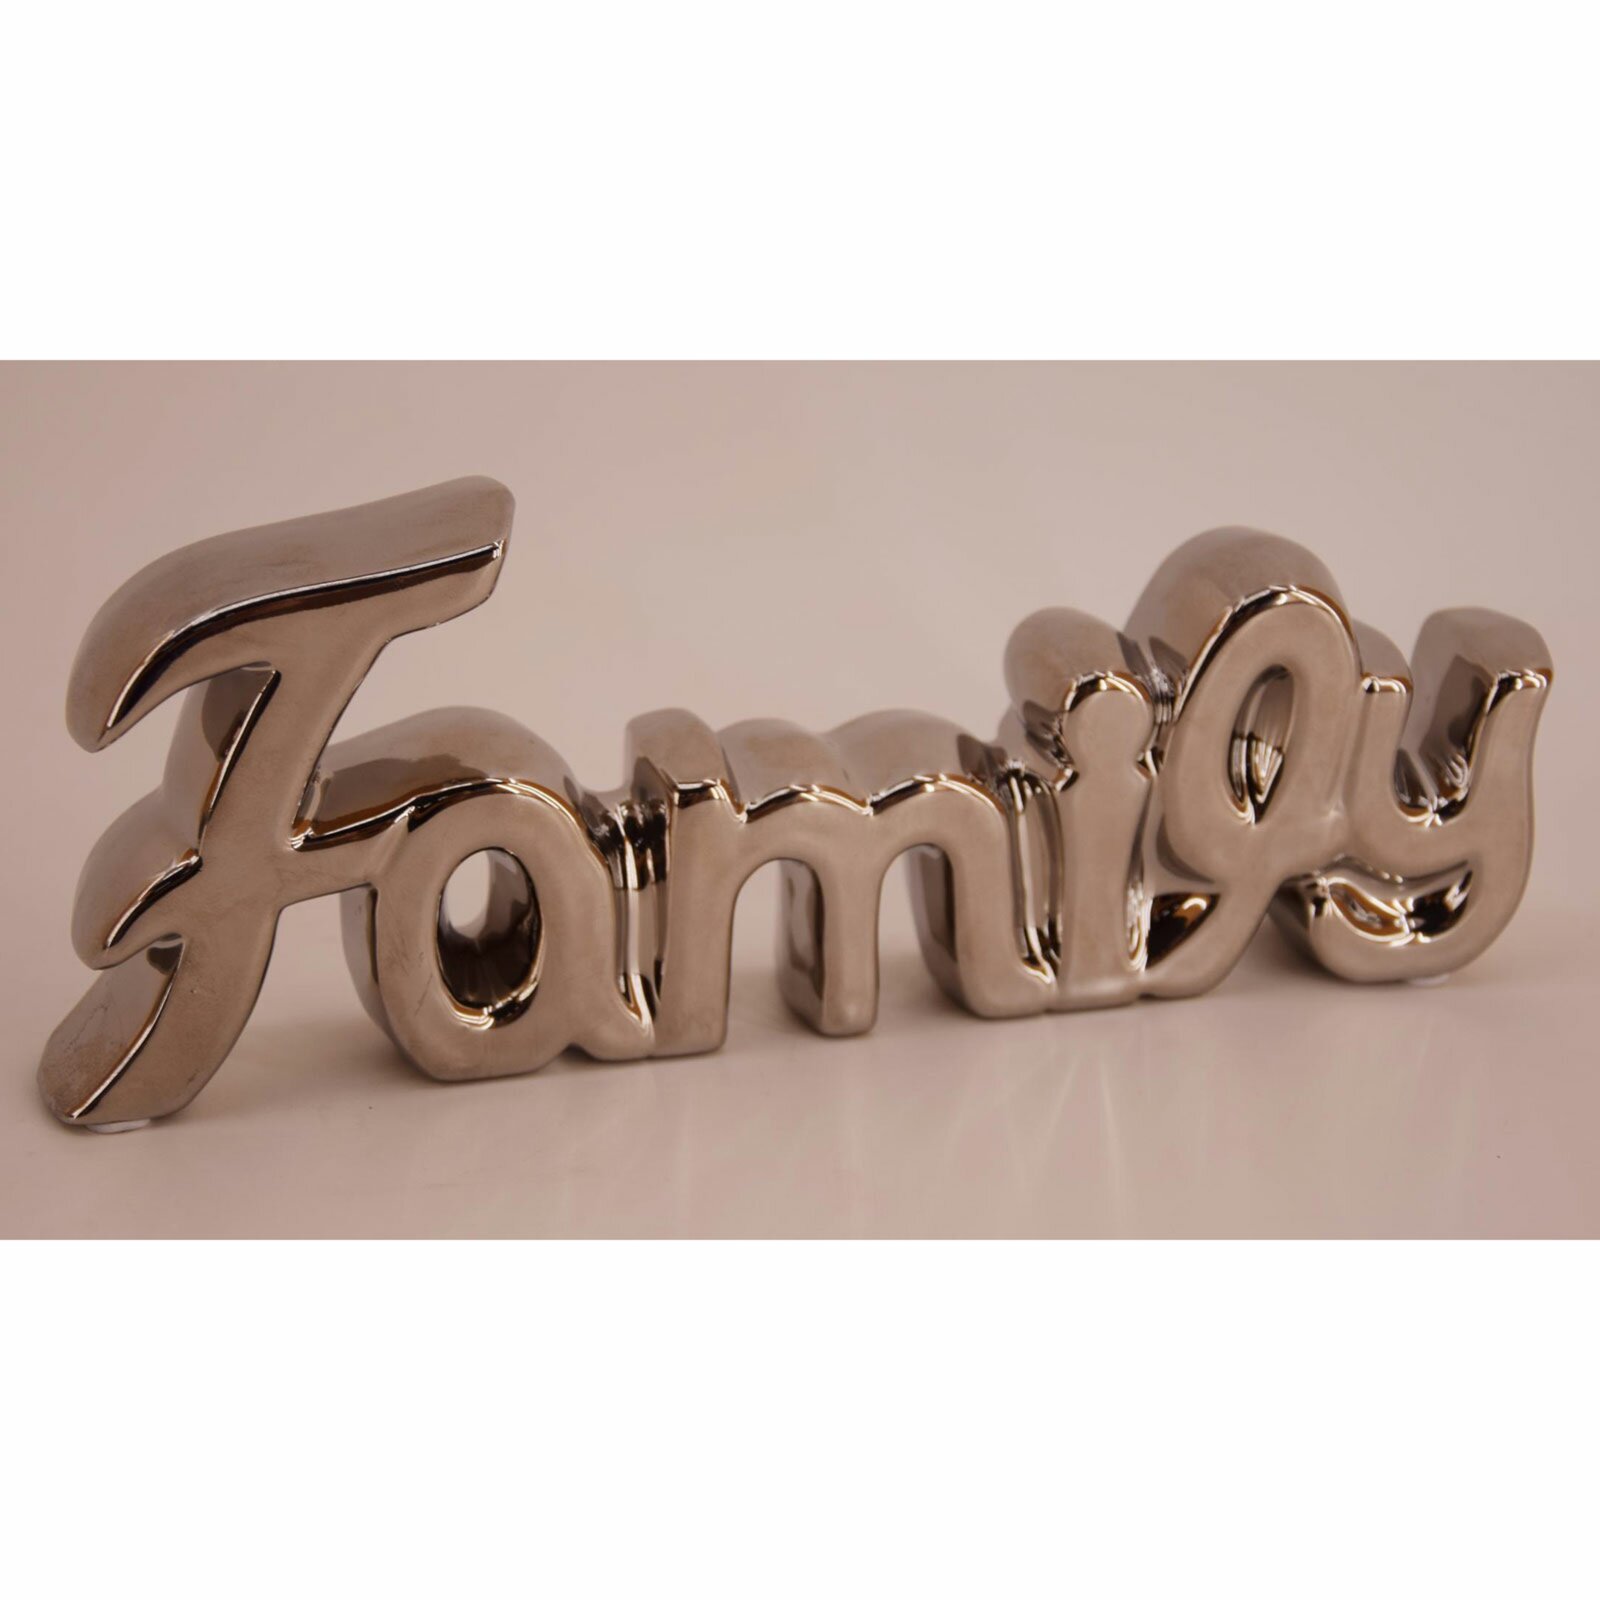 Deko Schriftzug FAMILY - silber - Keramik | Online bei ROLLER kaufen